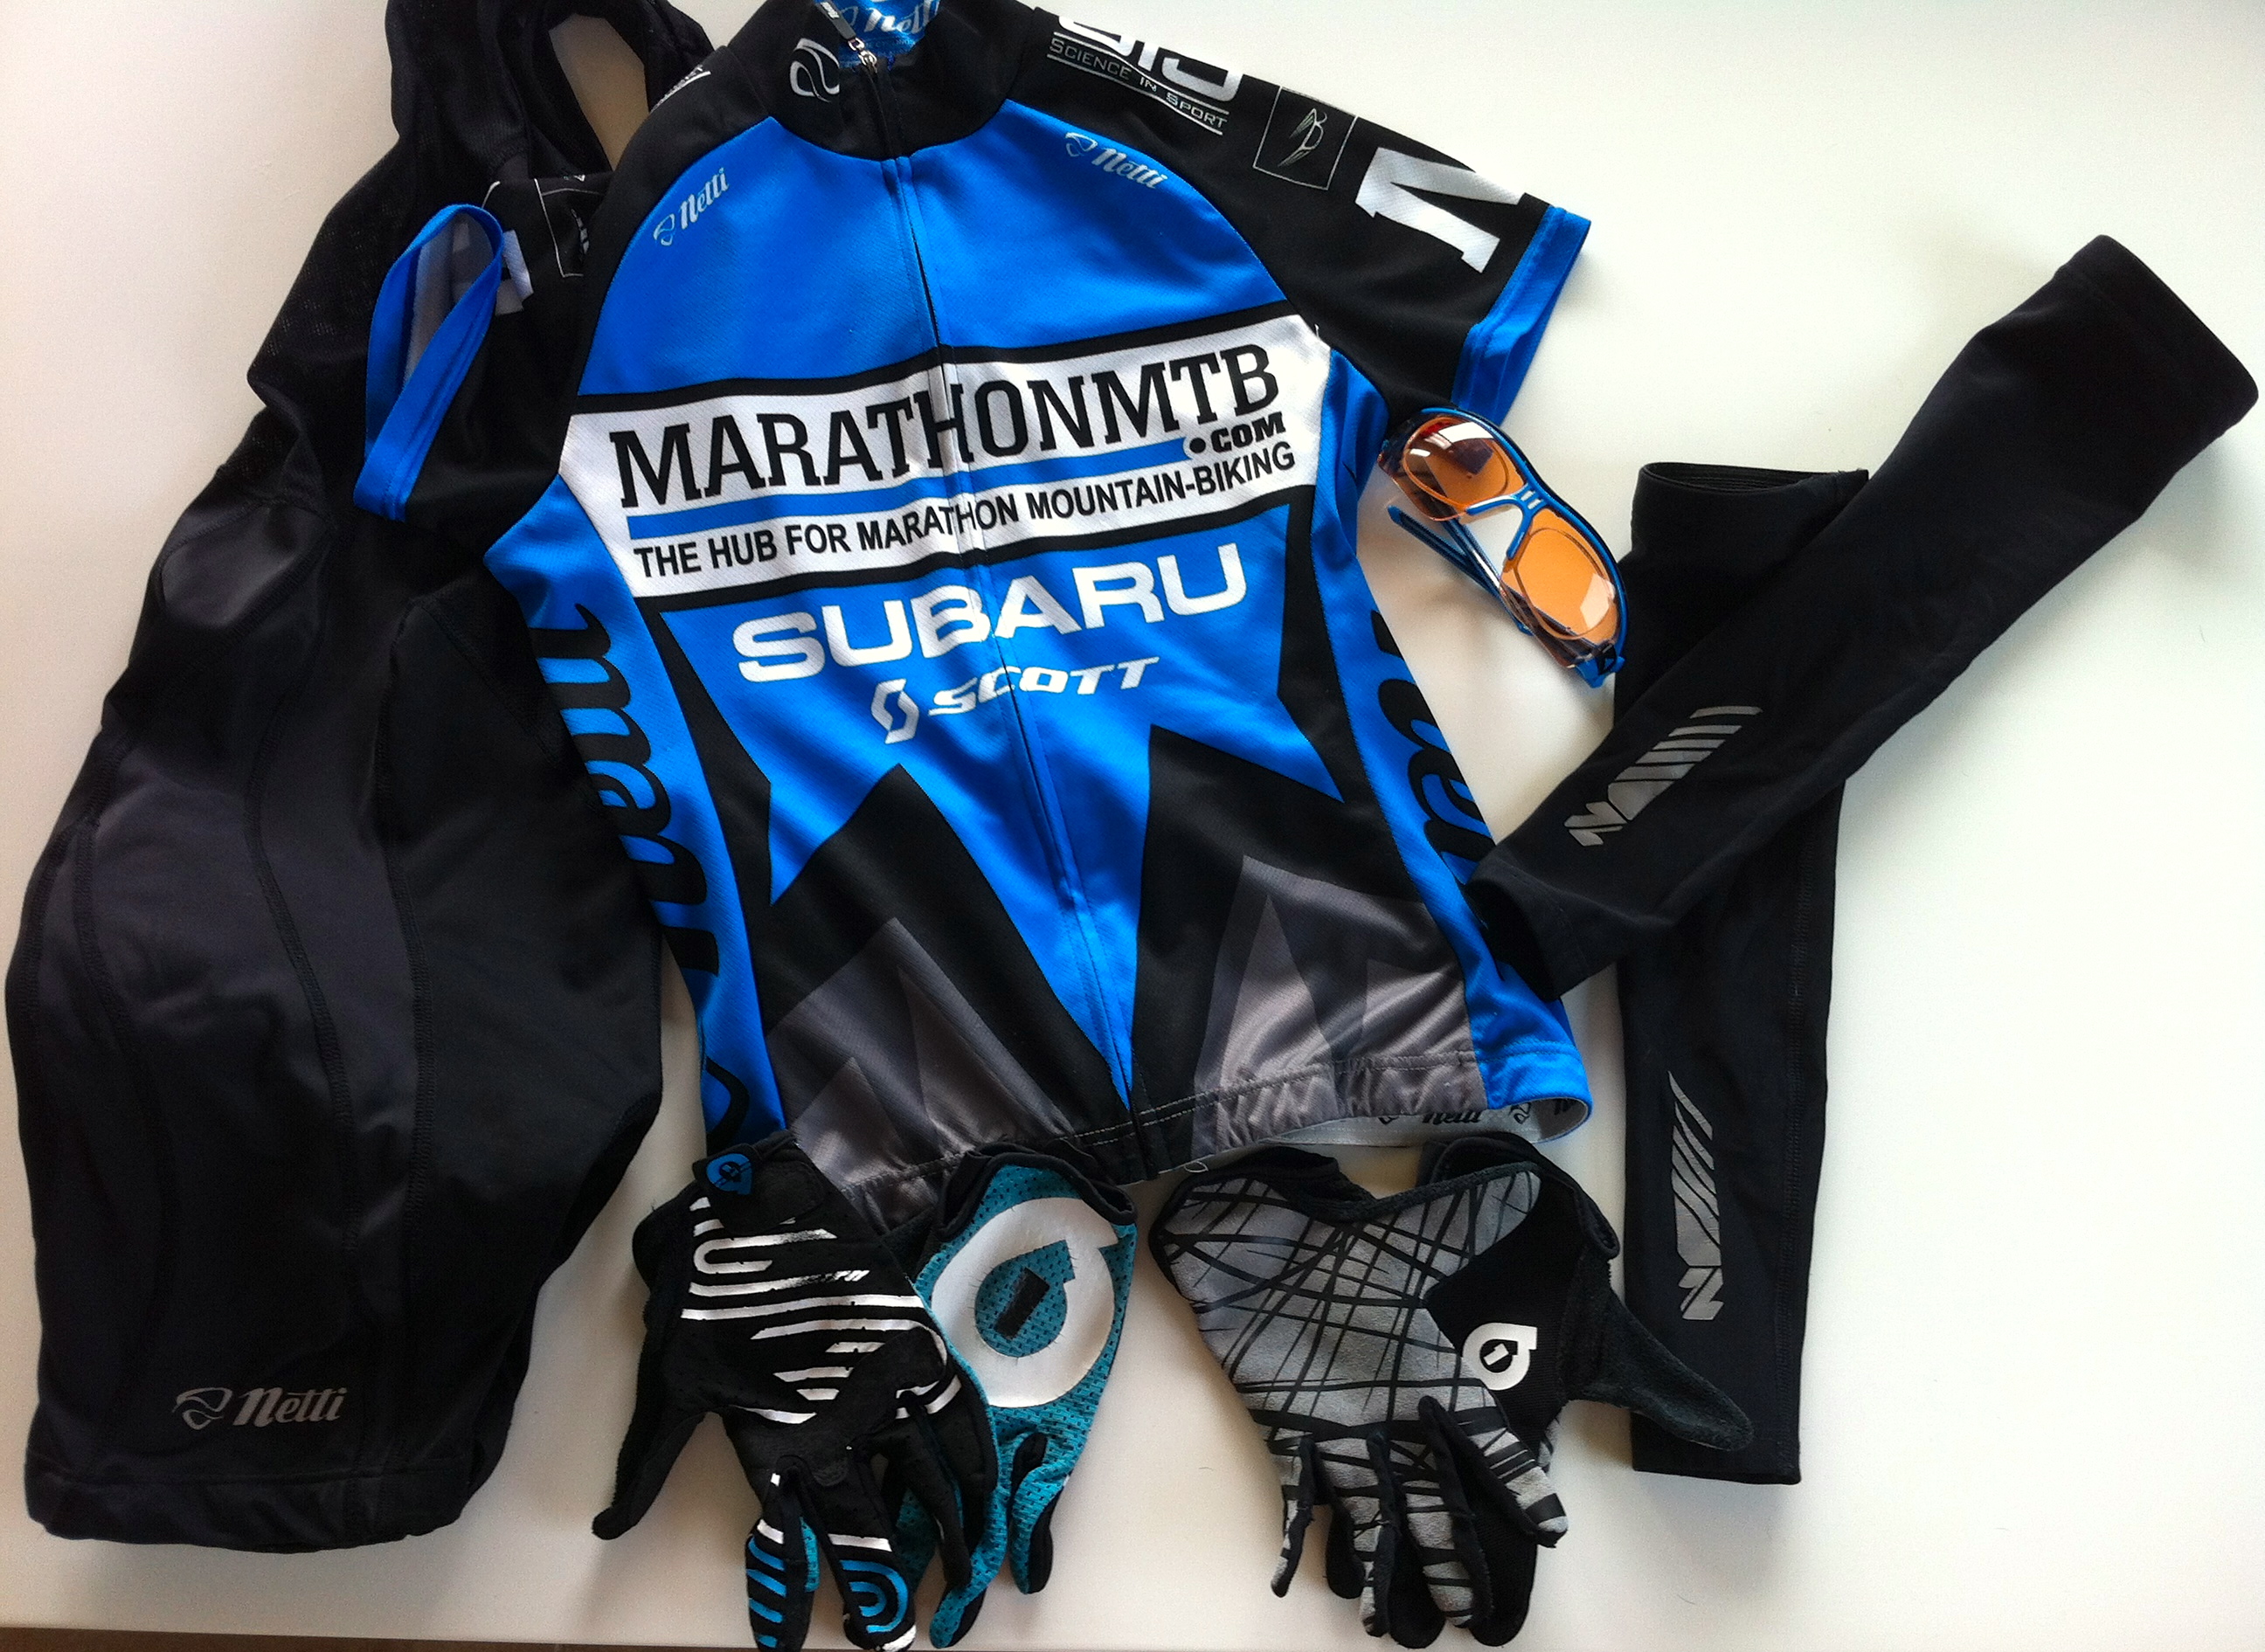 The Survivability Of Team Subaru Marathonmtb Cycling Clothing with regard to Cycling Attire